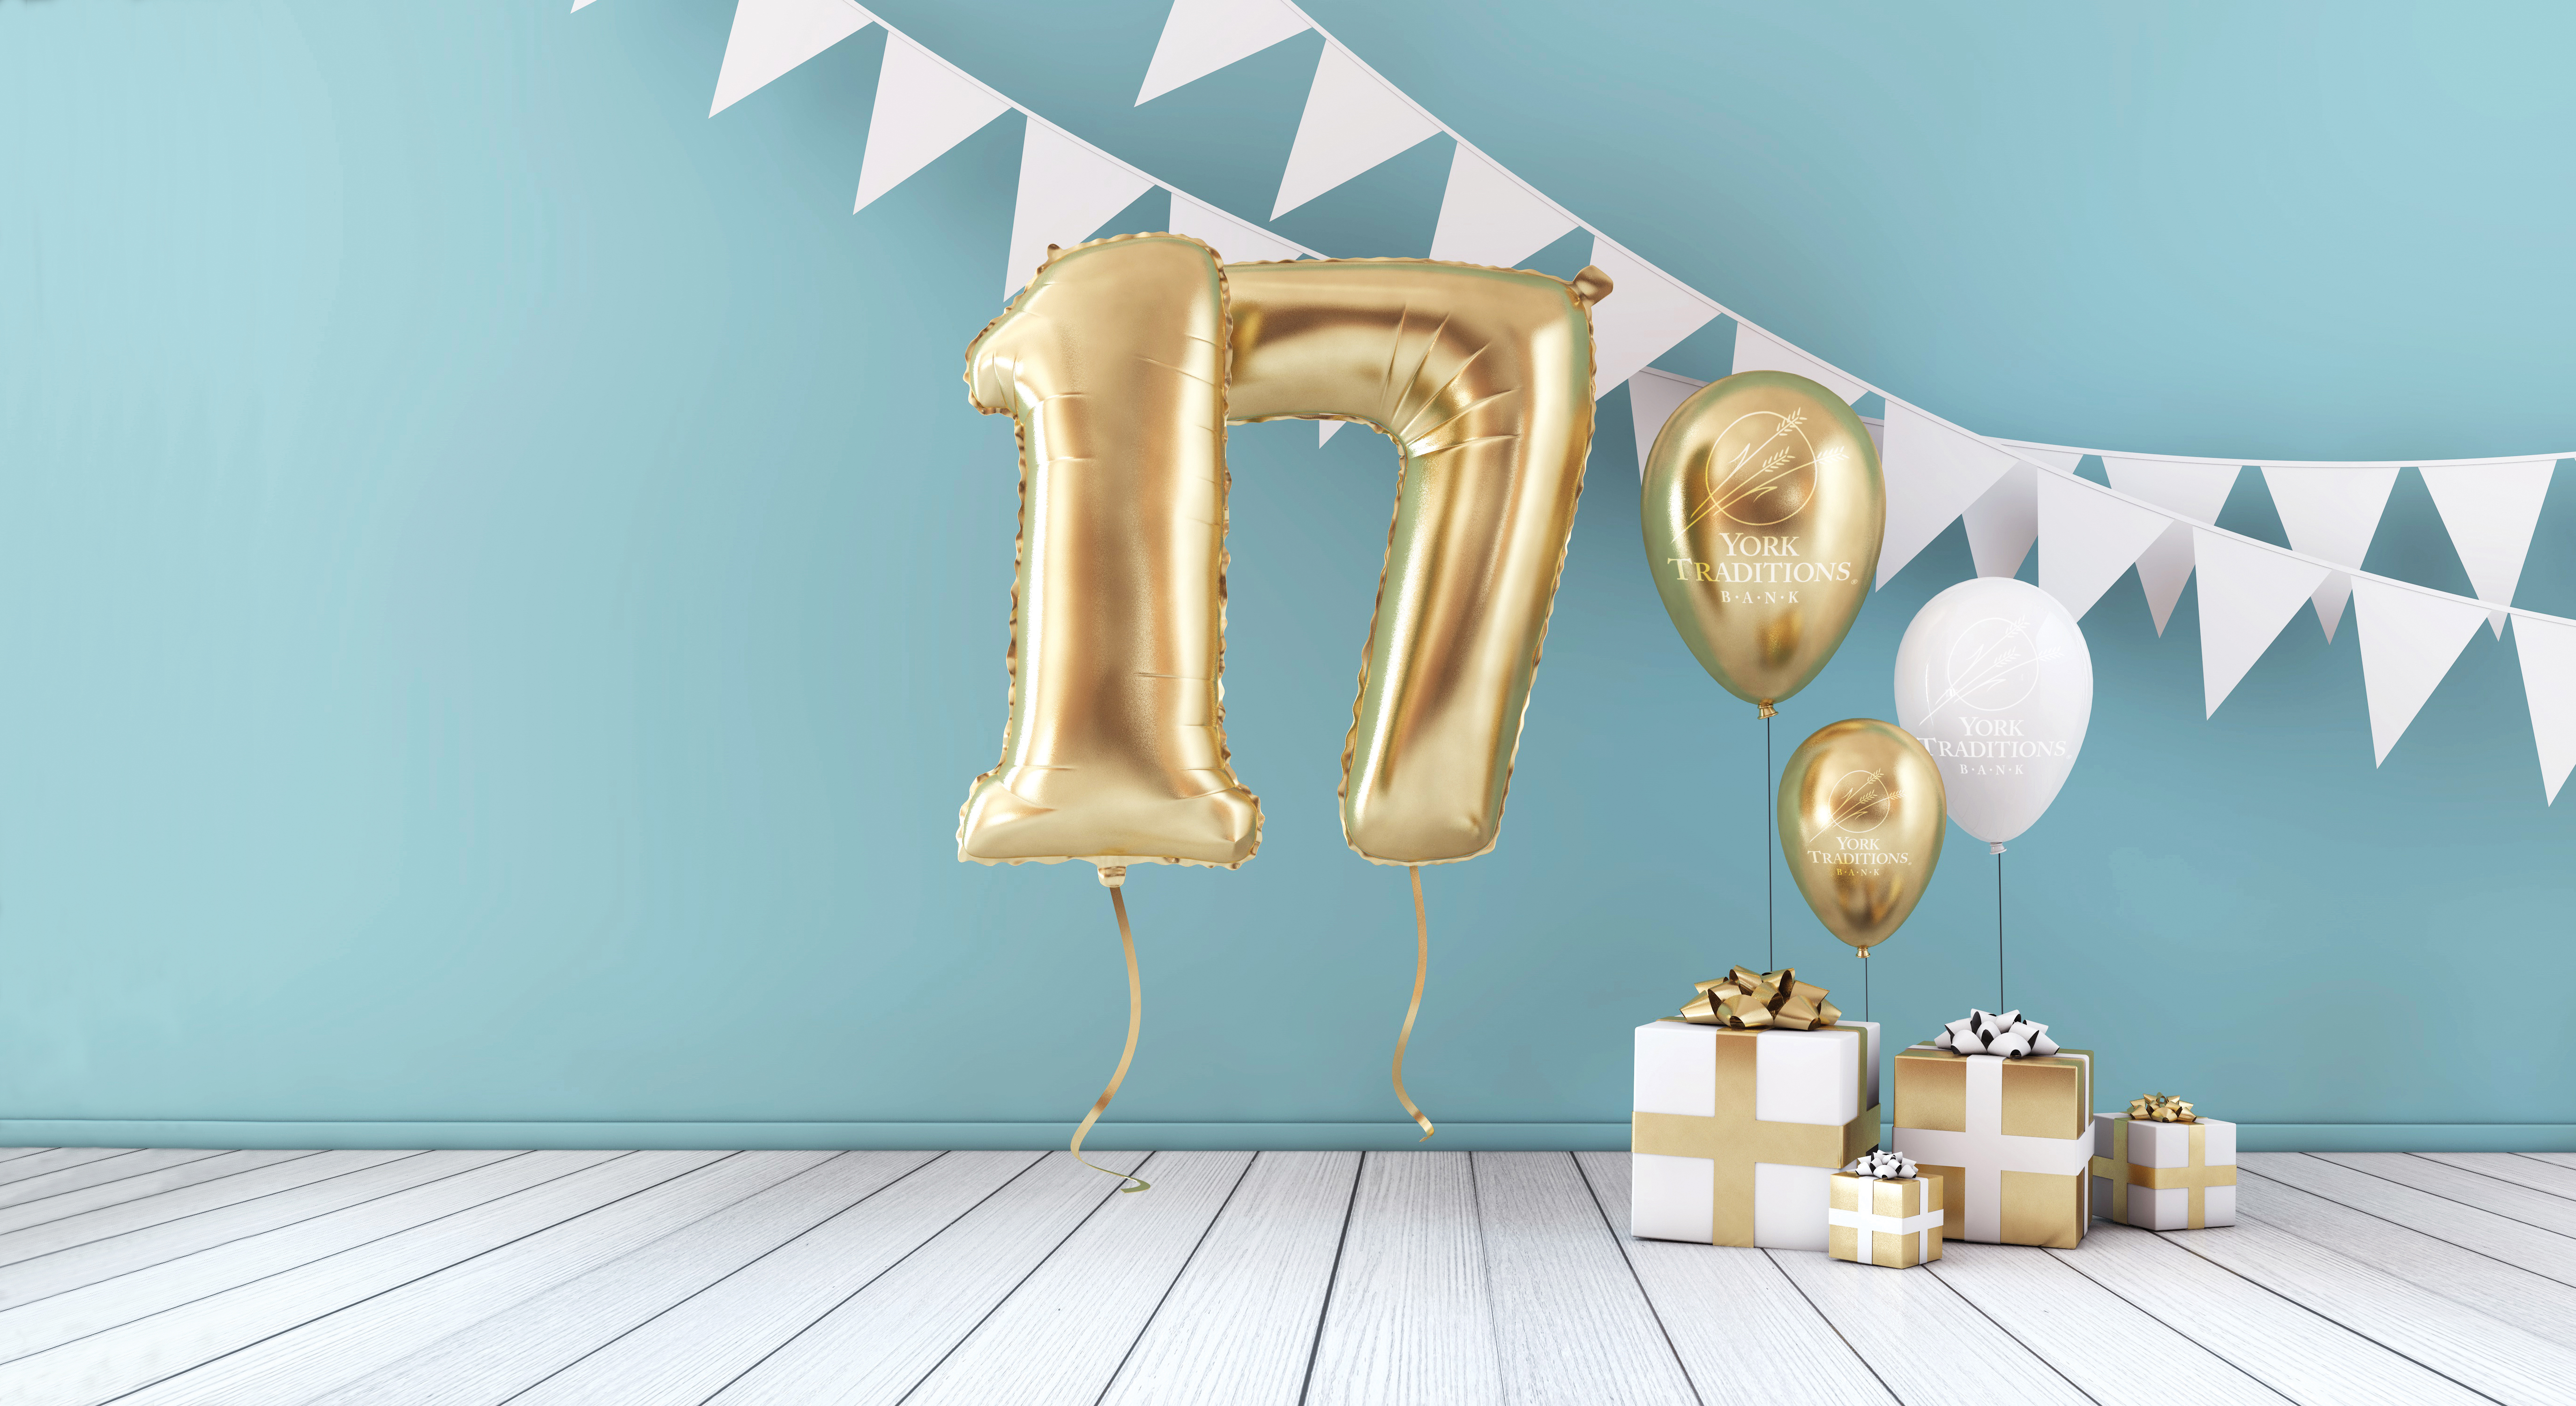 Image of birthday balloons